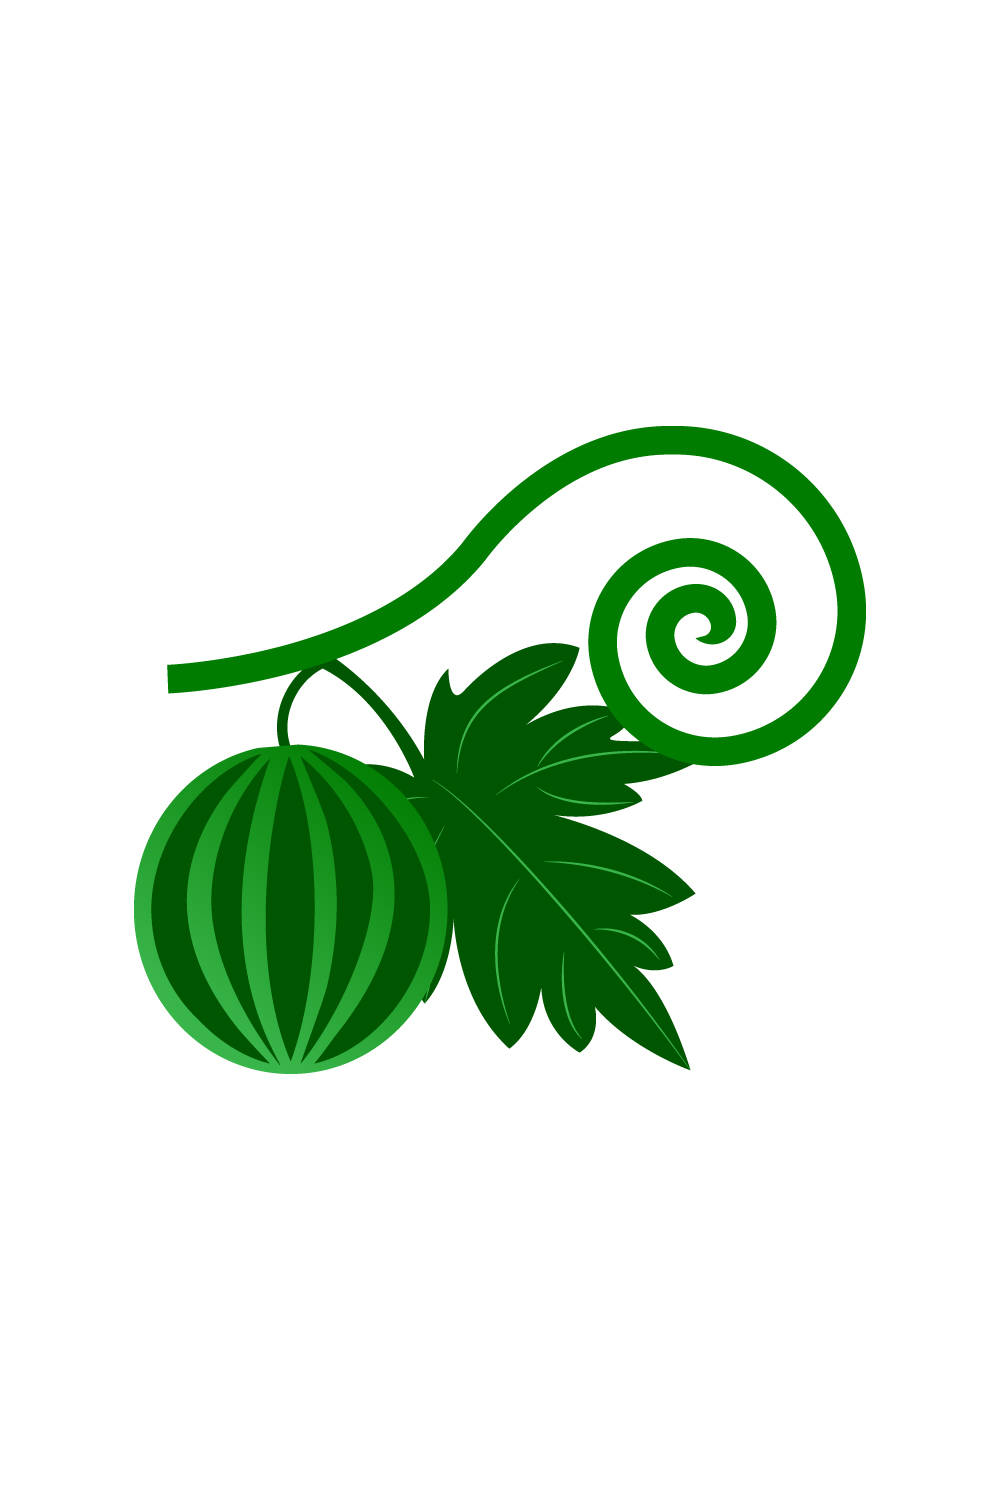 Watermelon logo design vector images Hand Drawn Watermelon logo template illustration pinterest preview image.